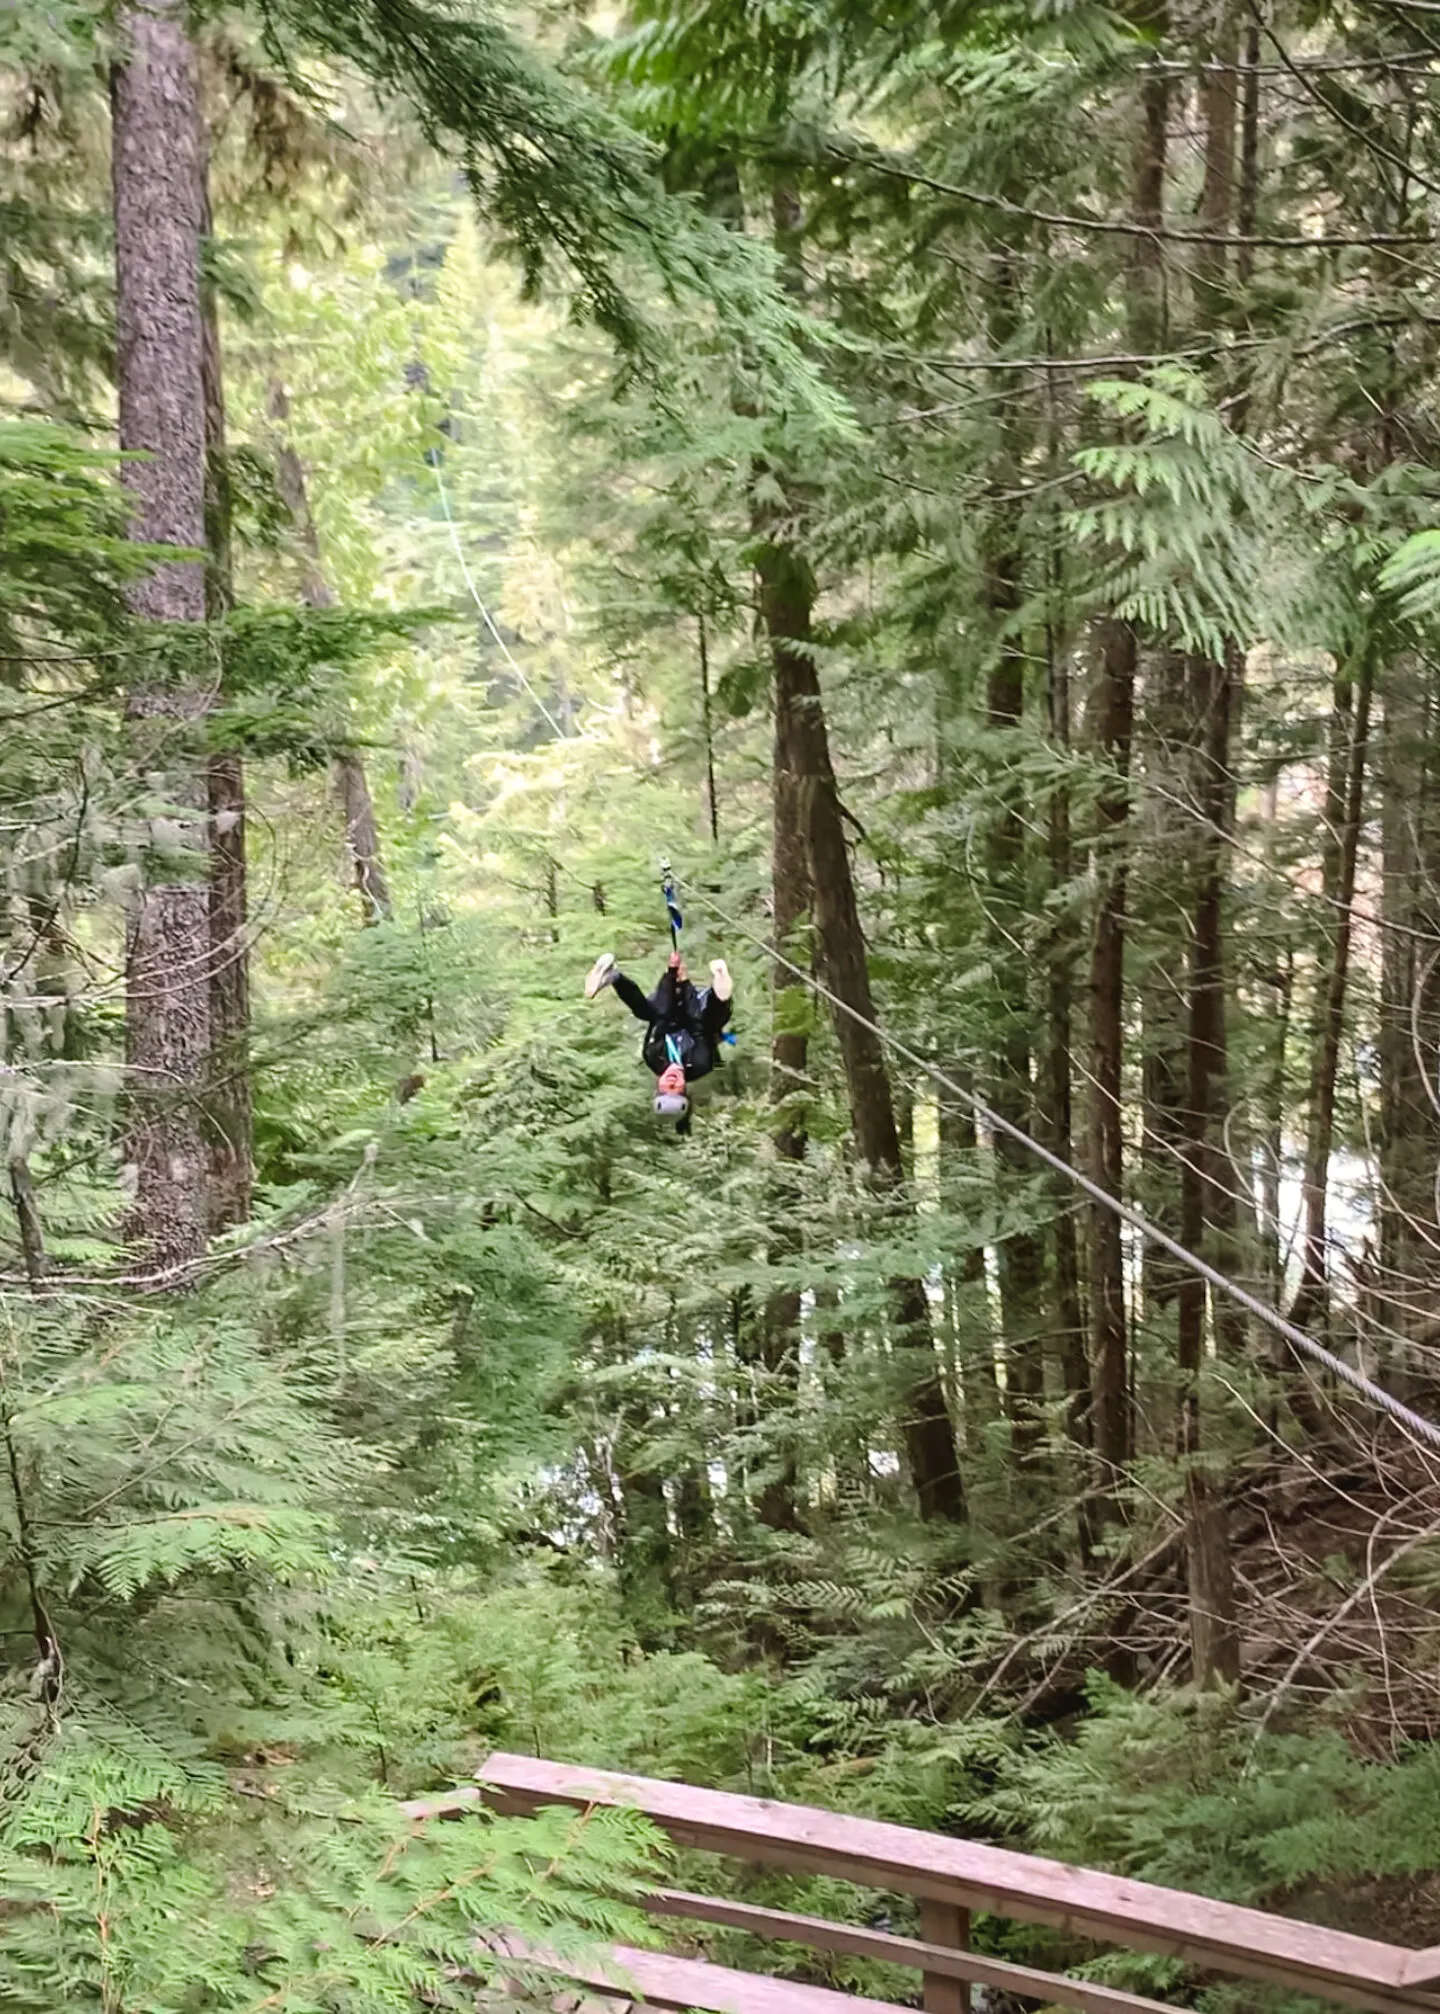 Eagle Tour zipline with Ziptrek Ecotours in Whistler, British Columbia